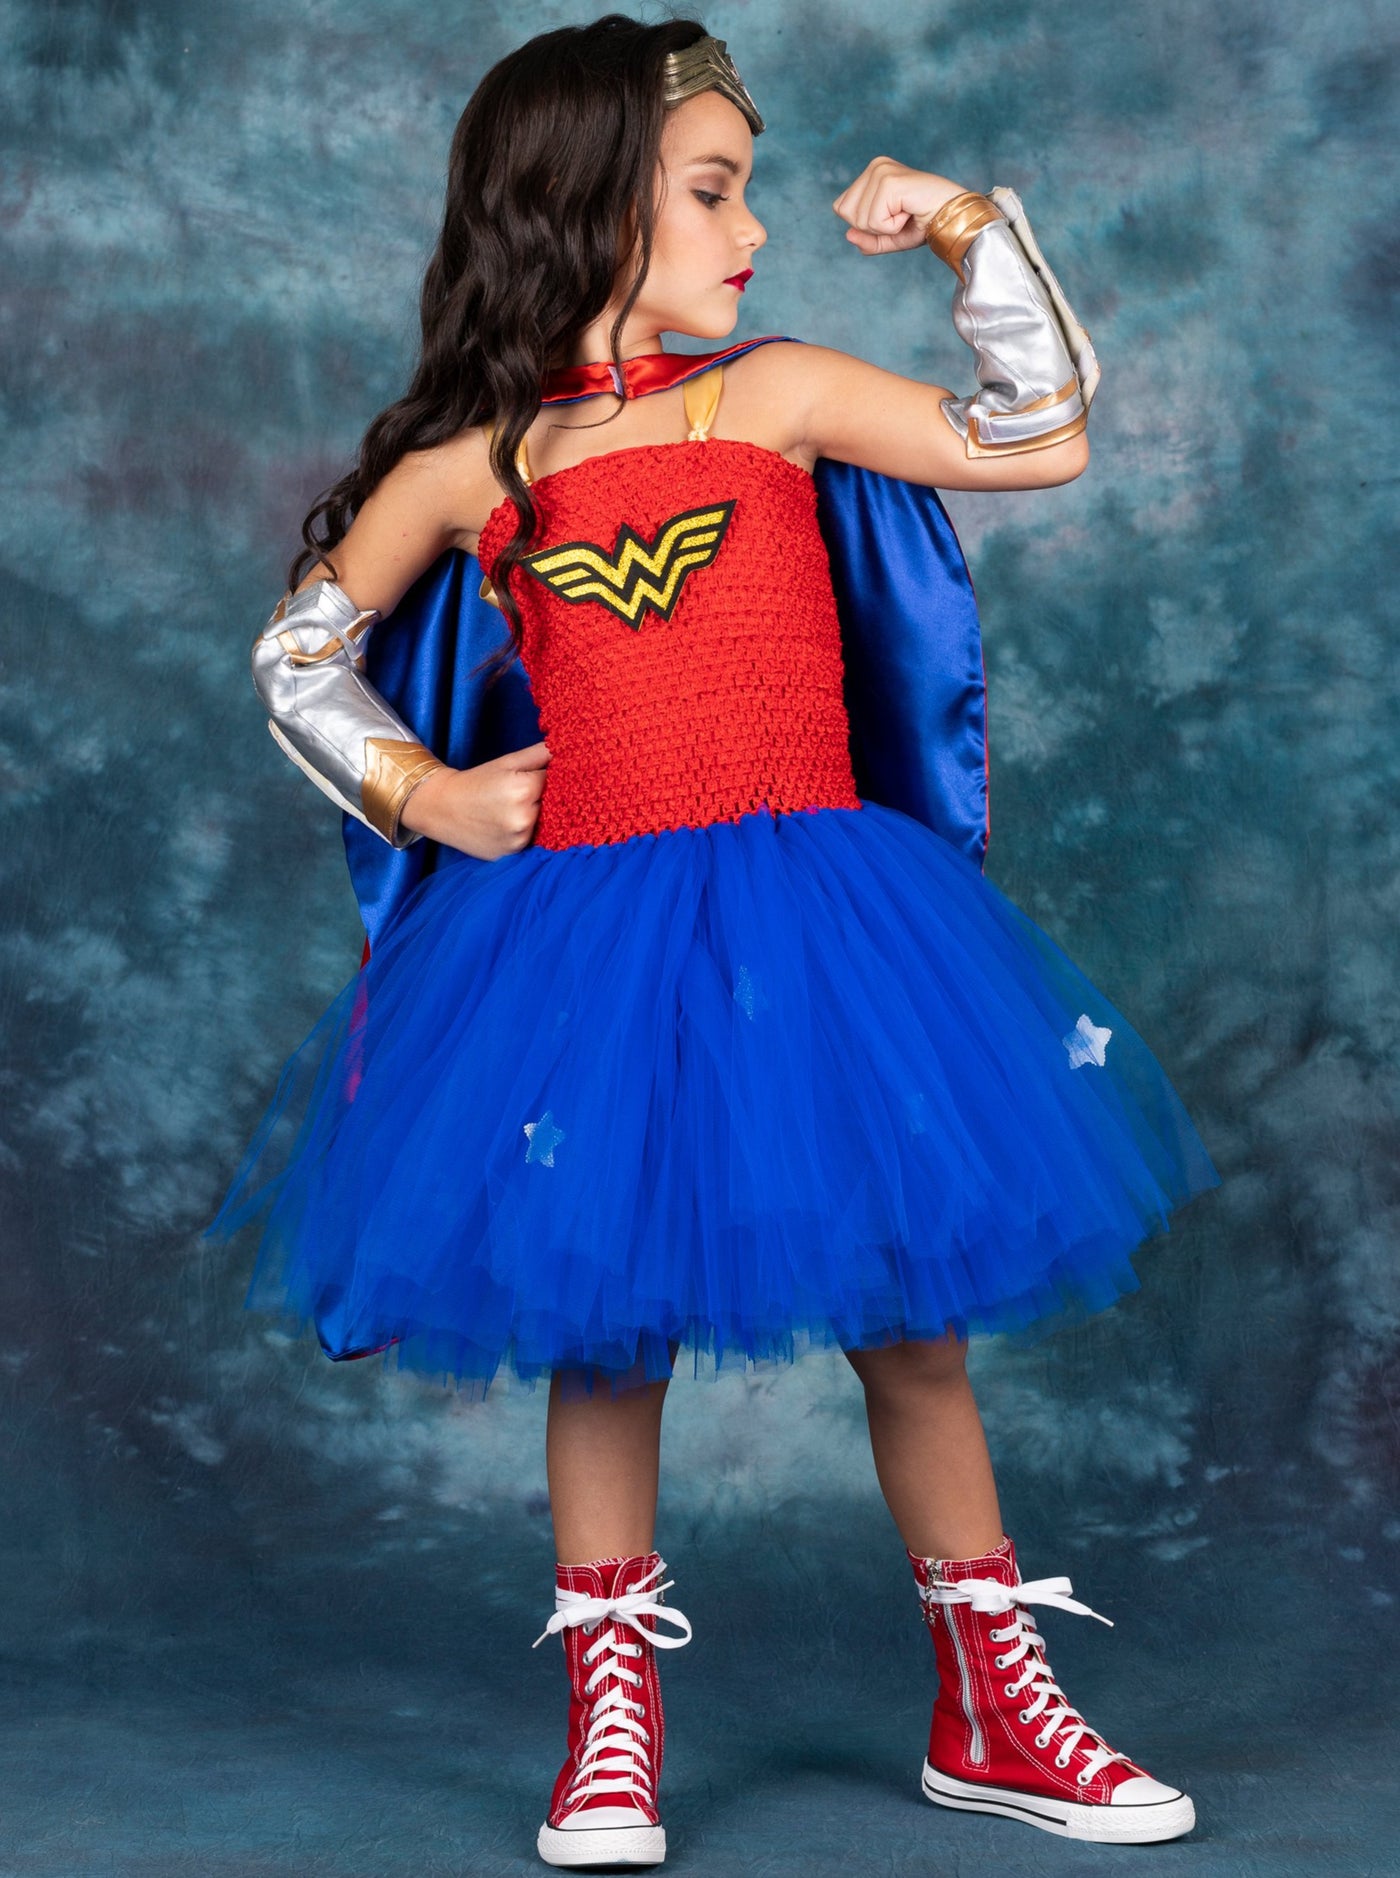 Wonder Woman Costumes For Kids, wonder woman costume 